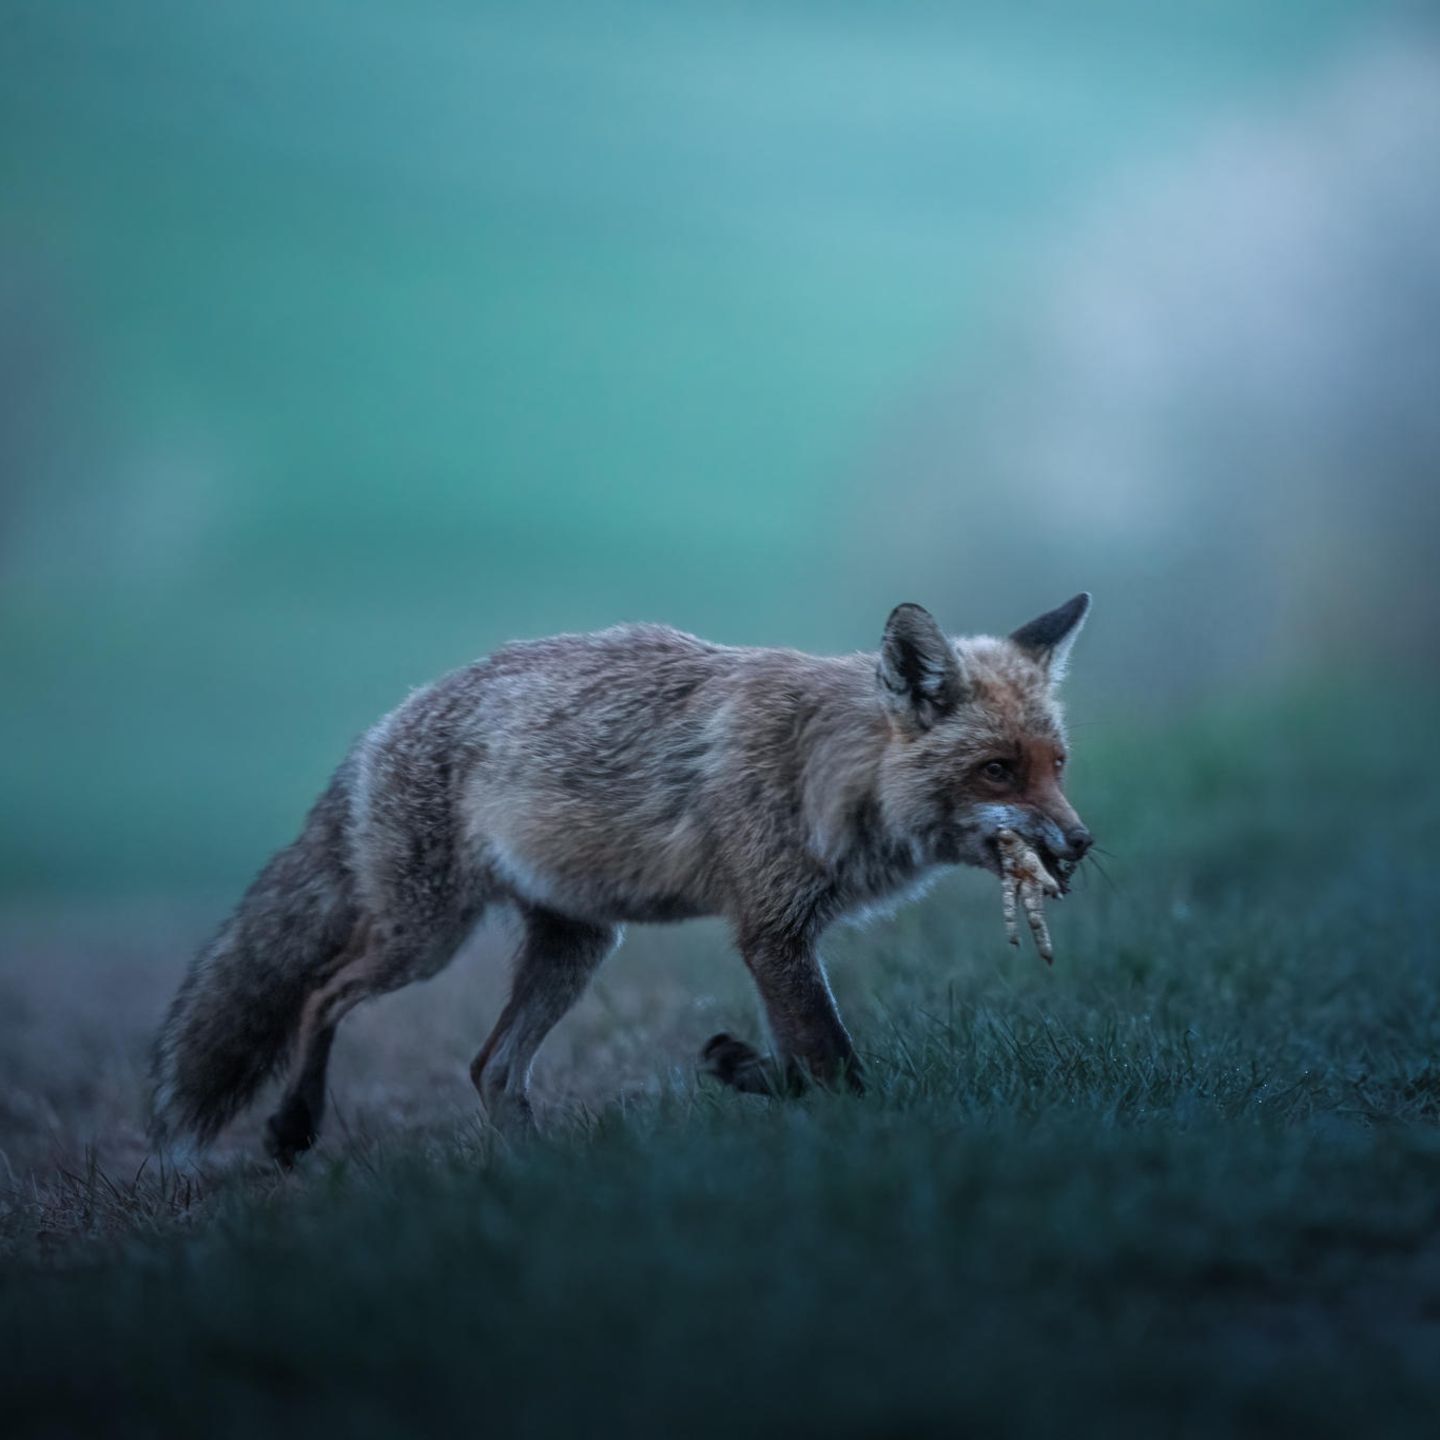 Fuchs mit Beute im Maul